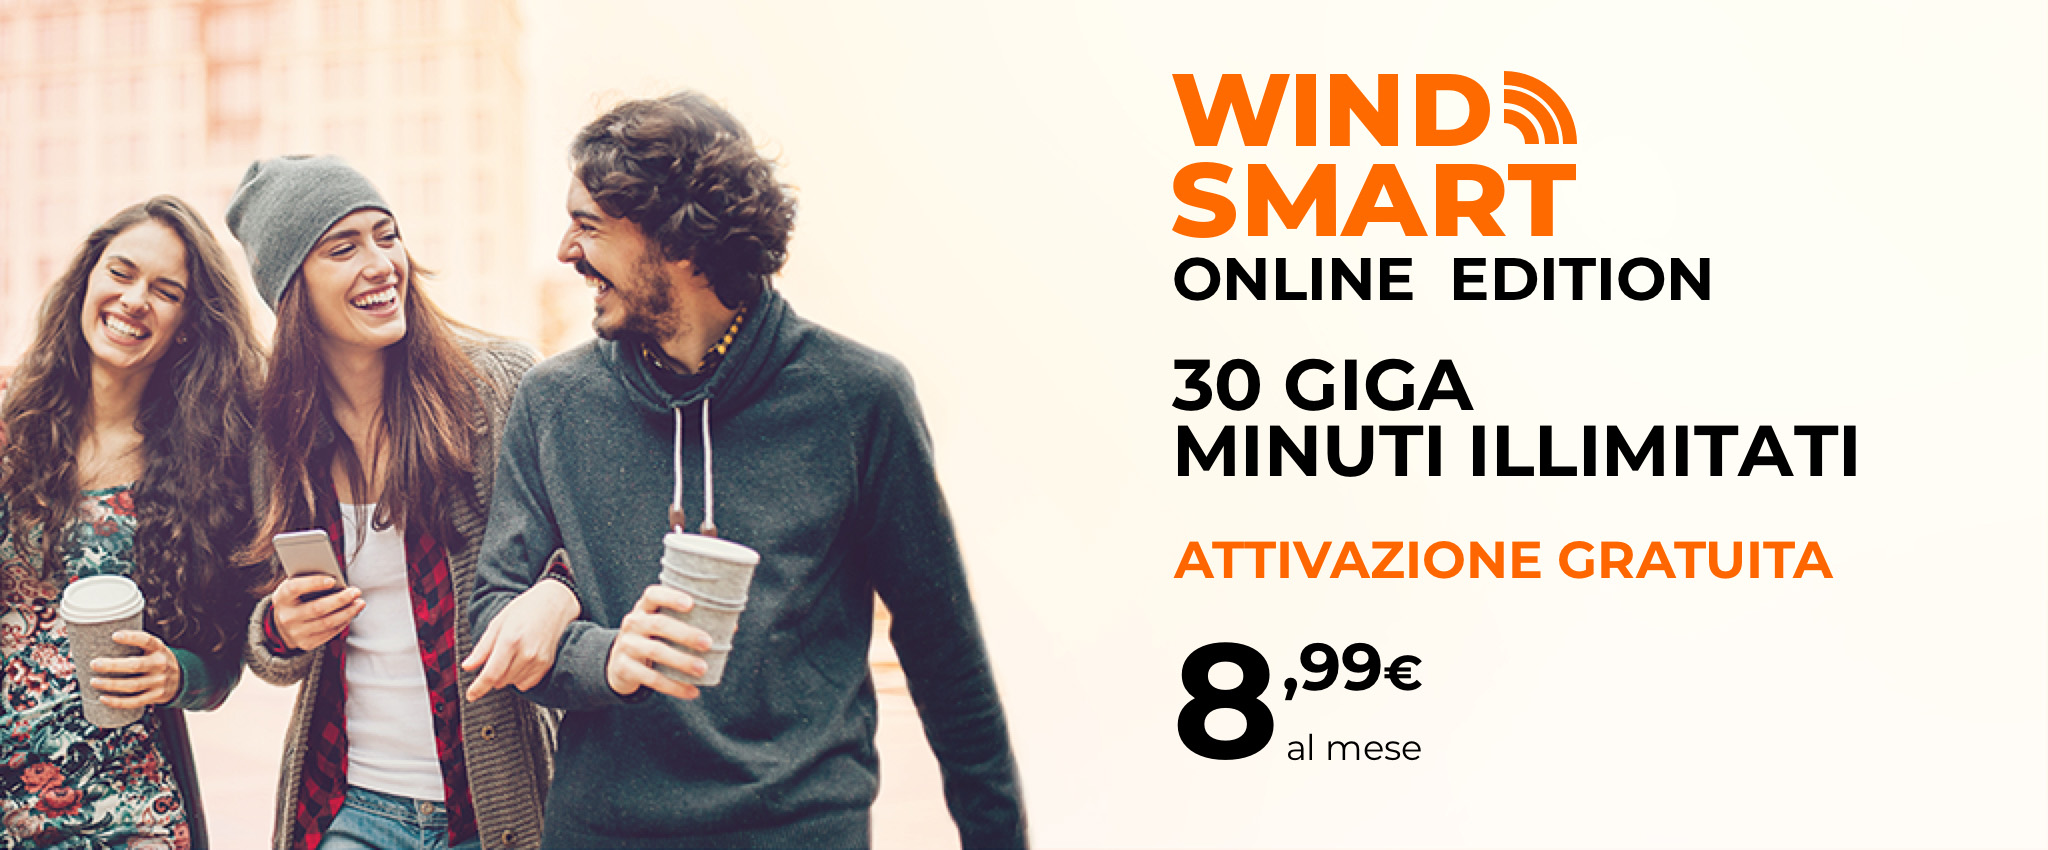 wind smart online edition